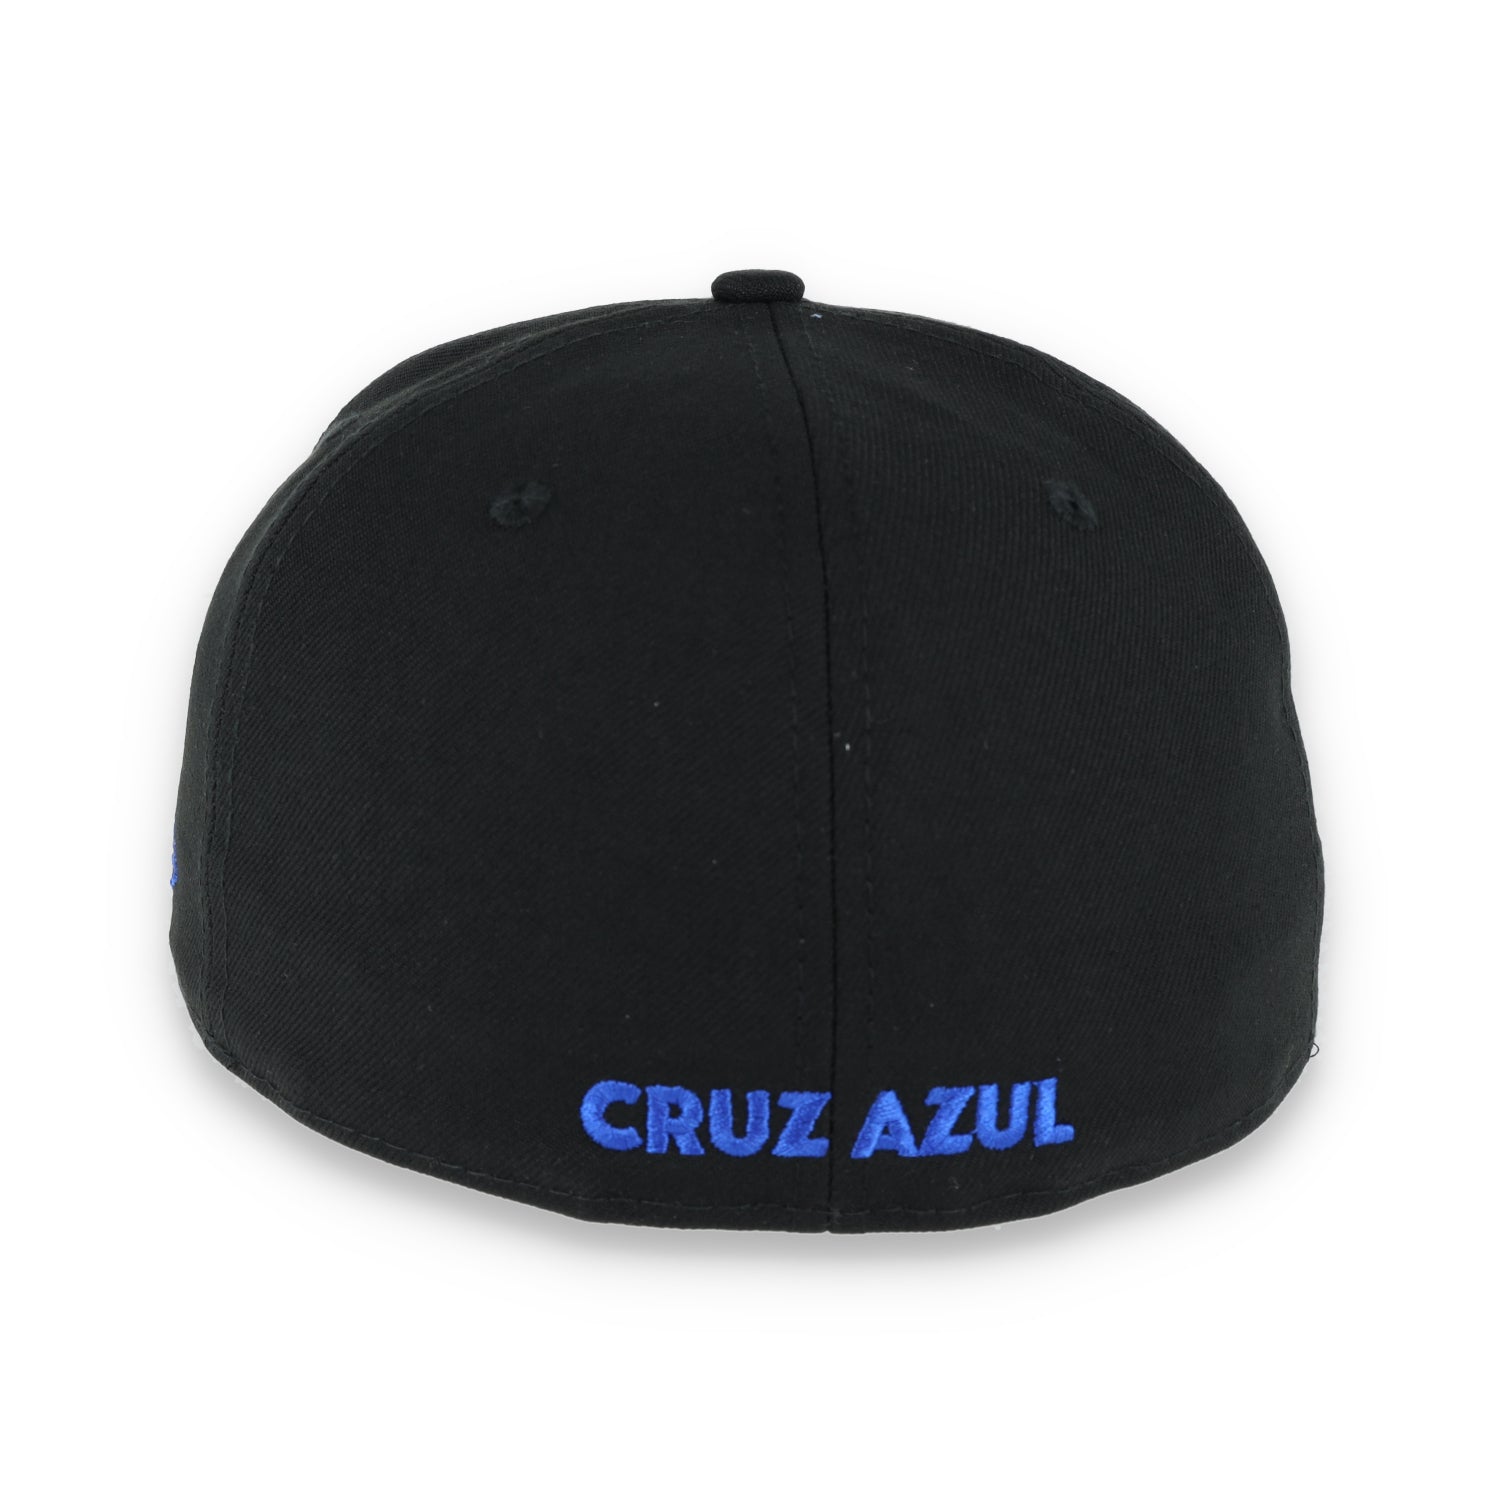 NEW ERA CRUZ AZUL SUGAR SKULL 59FIFTY FITTED HAT